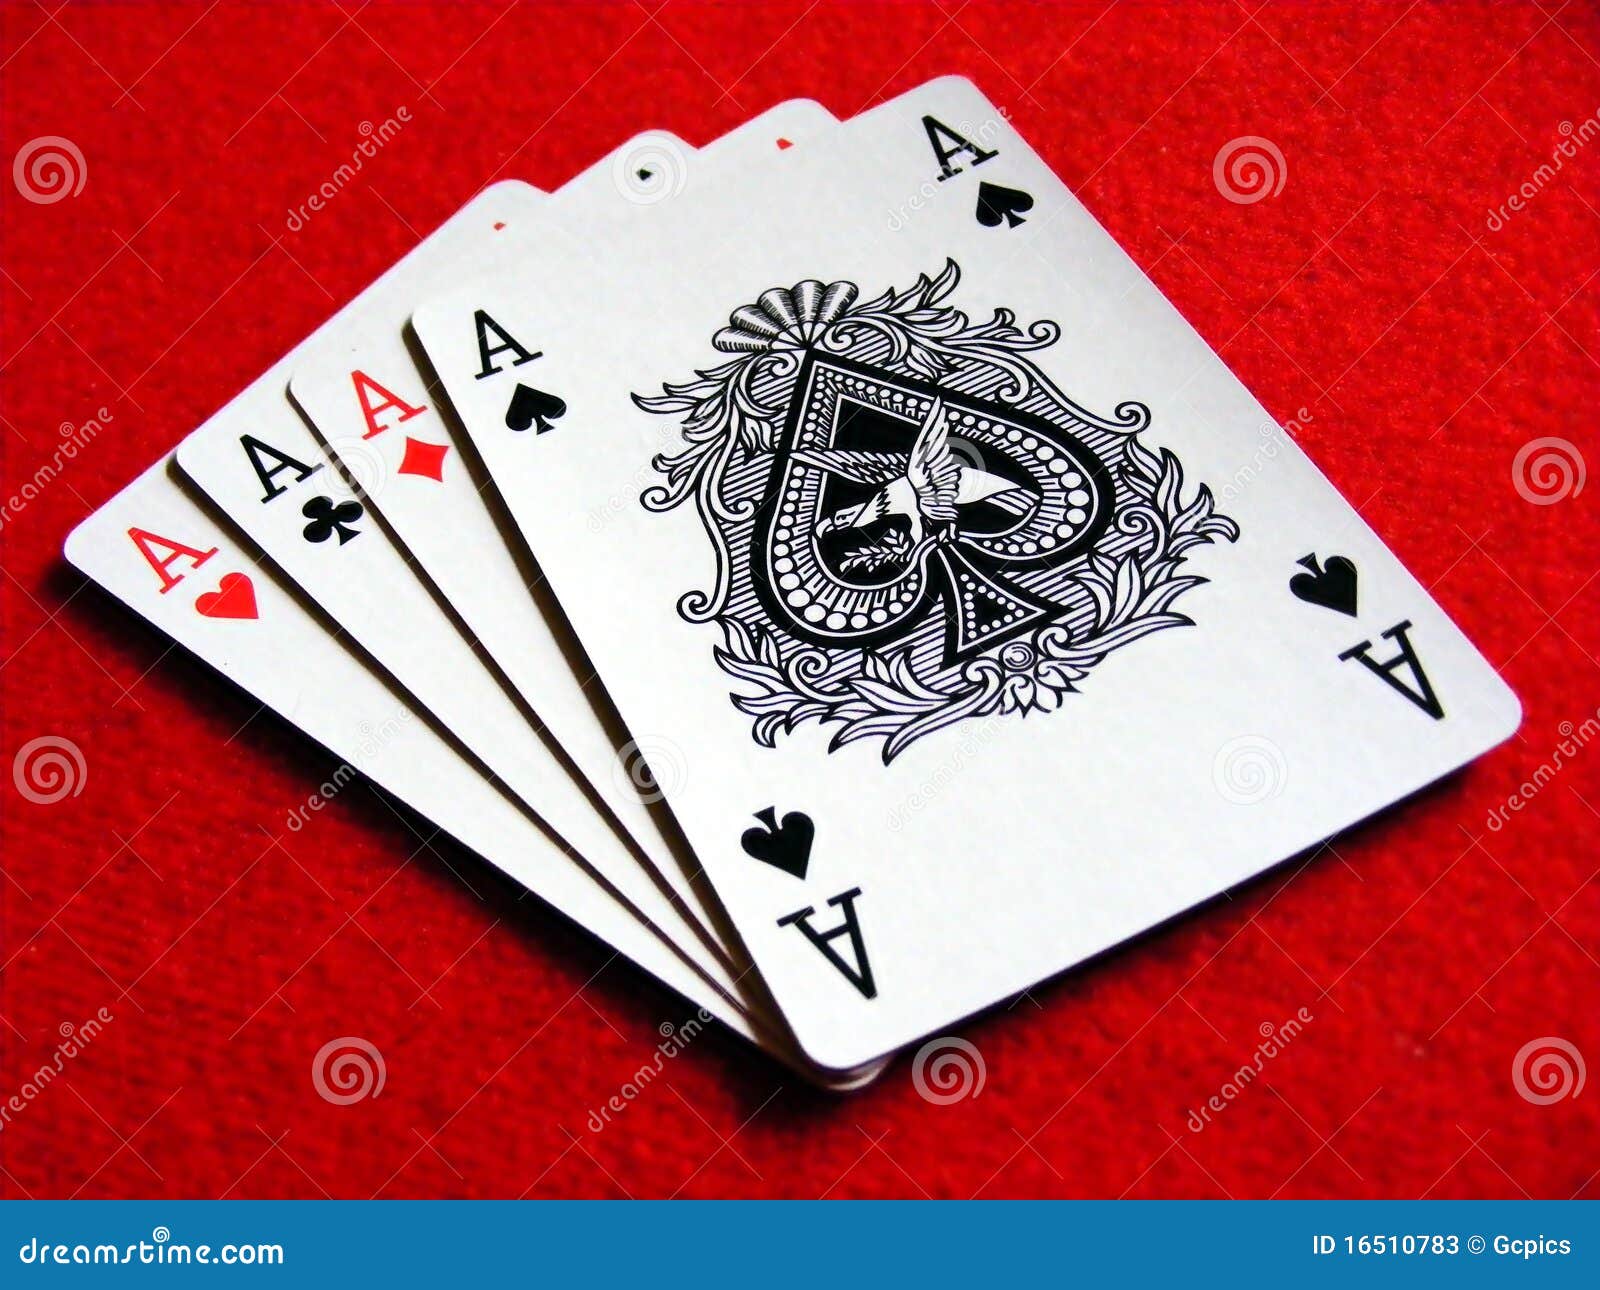 Schiff Poker Casino Split Aces -974098